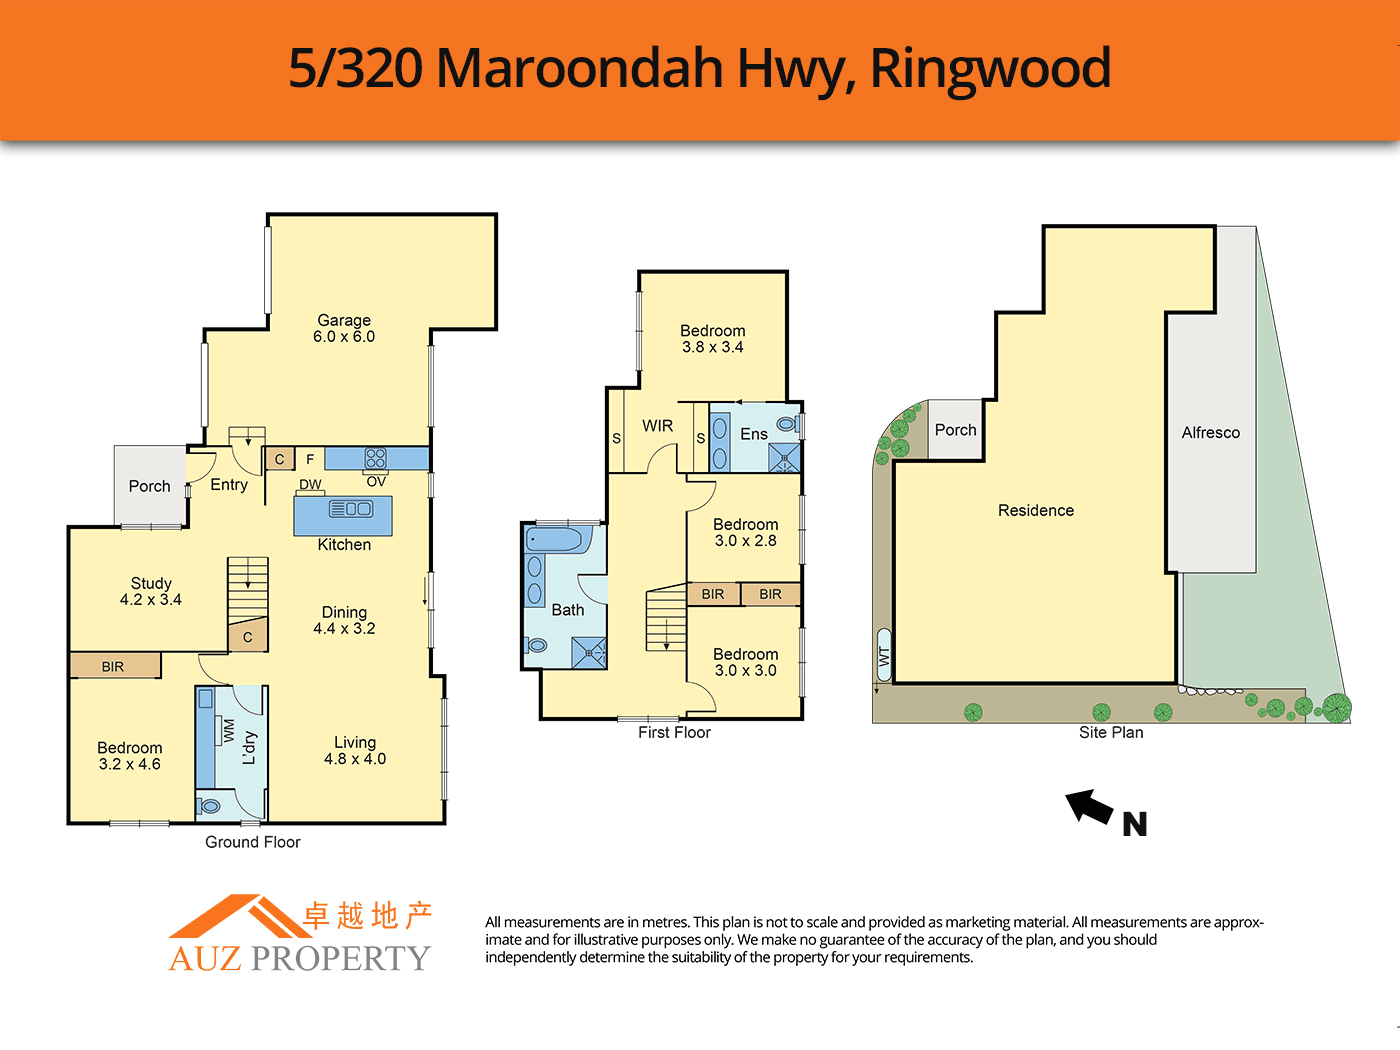 5/320 Maroondah Highway, RINGWOOD, VIC 3134